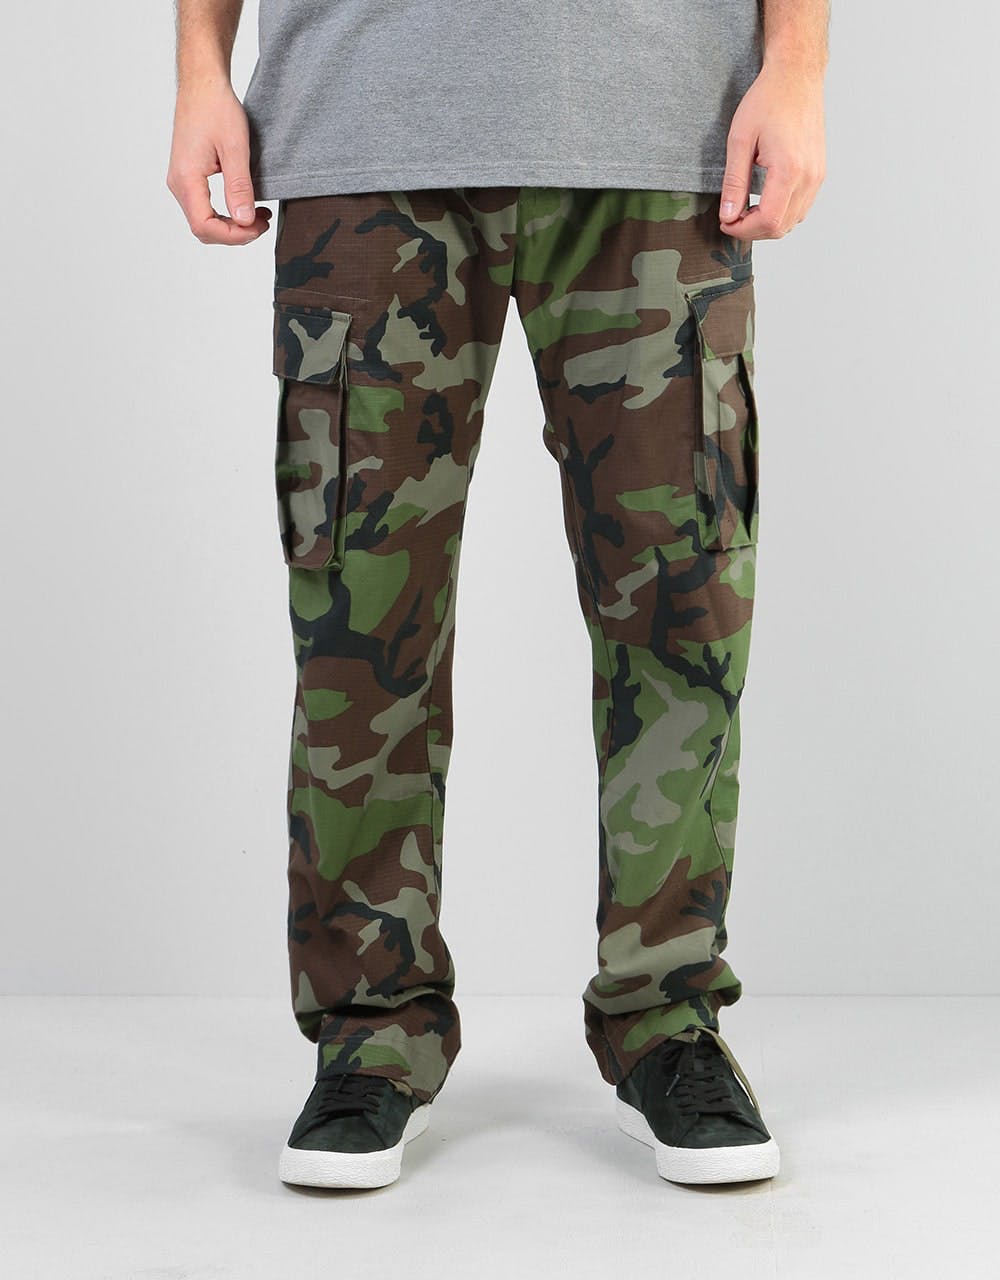 Nike SB FTM Flex Cargo Pants - Medium Olive